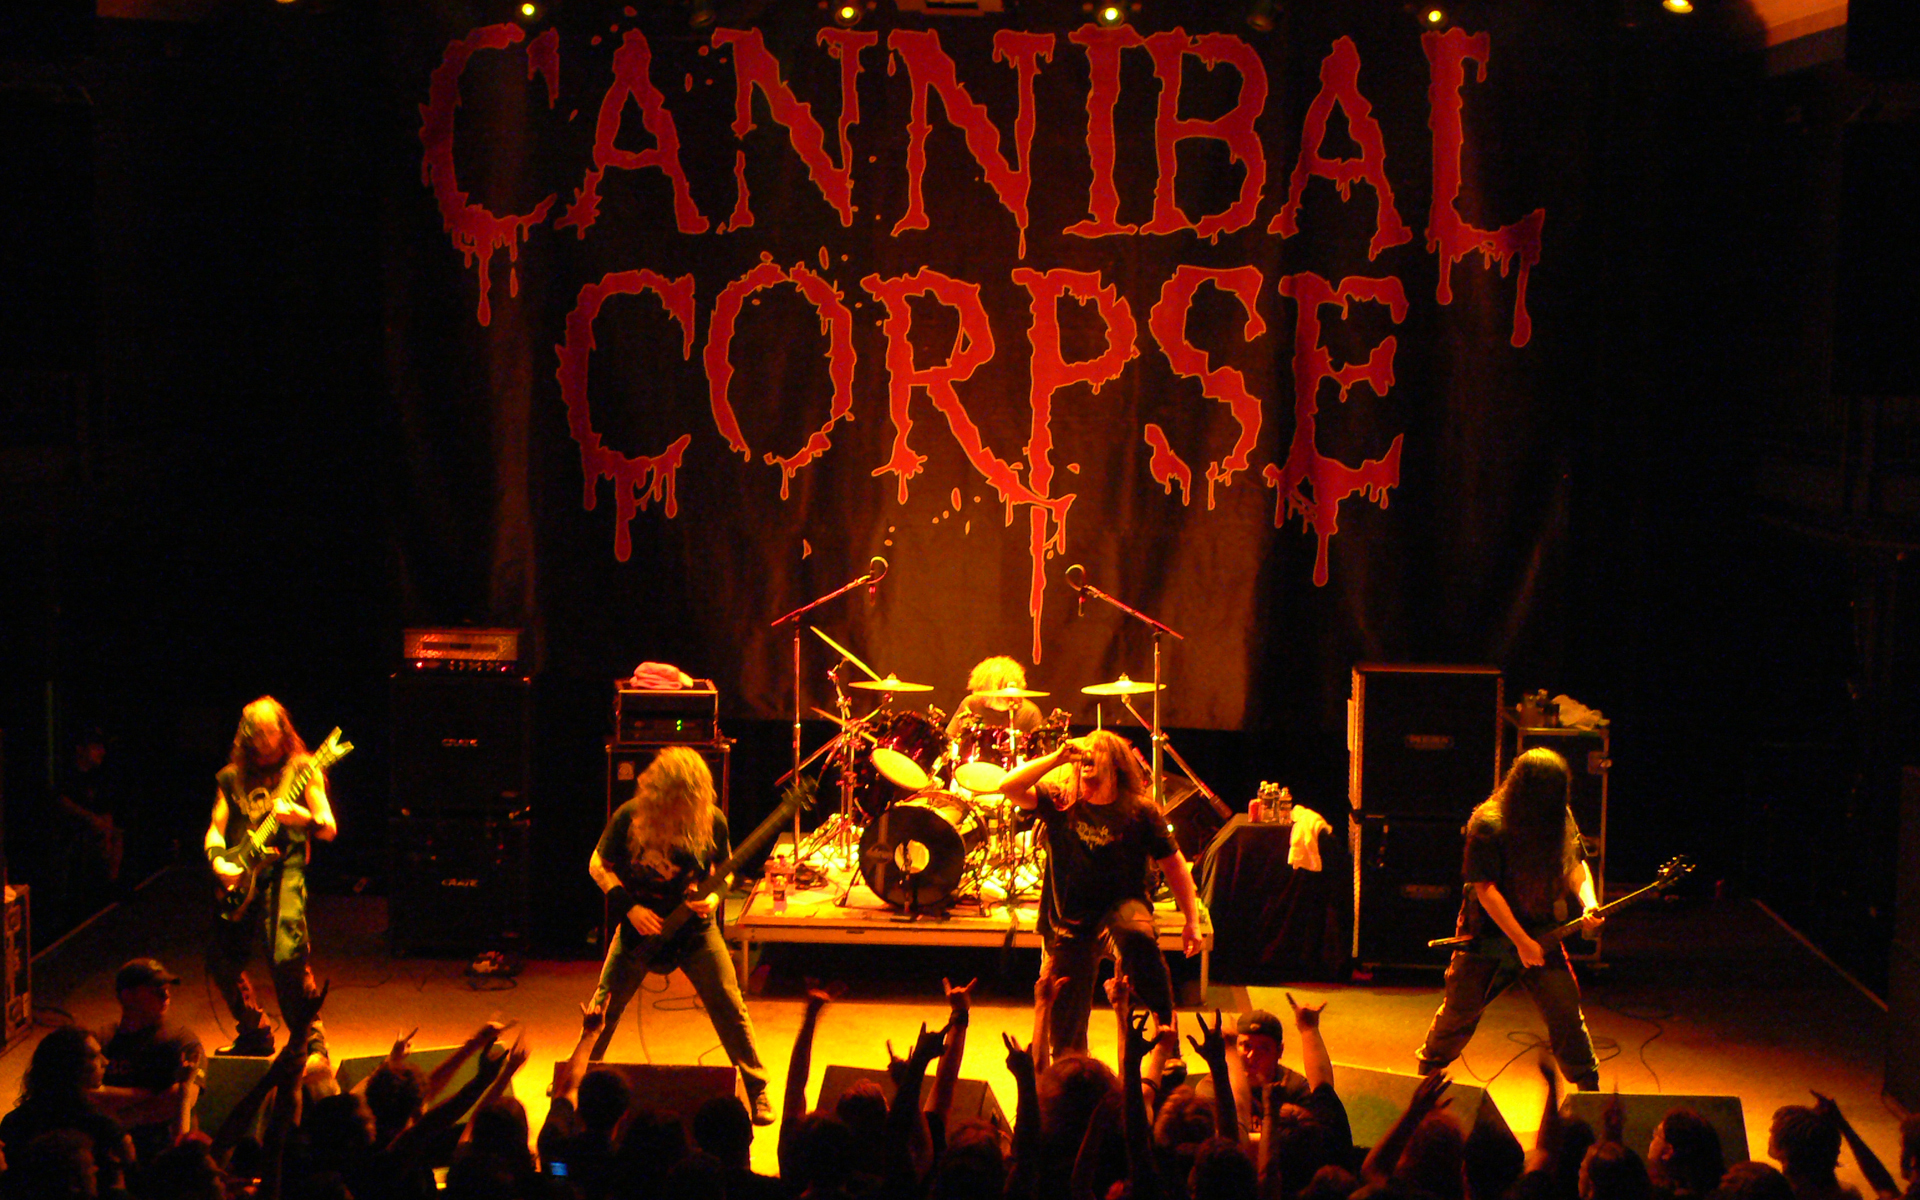 Cannibal Corpse Computer Wallpapers, Desktop Backgrounds ...